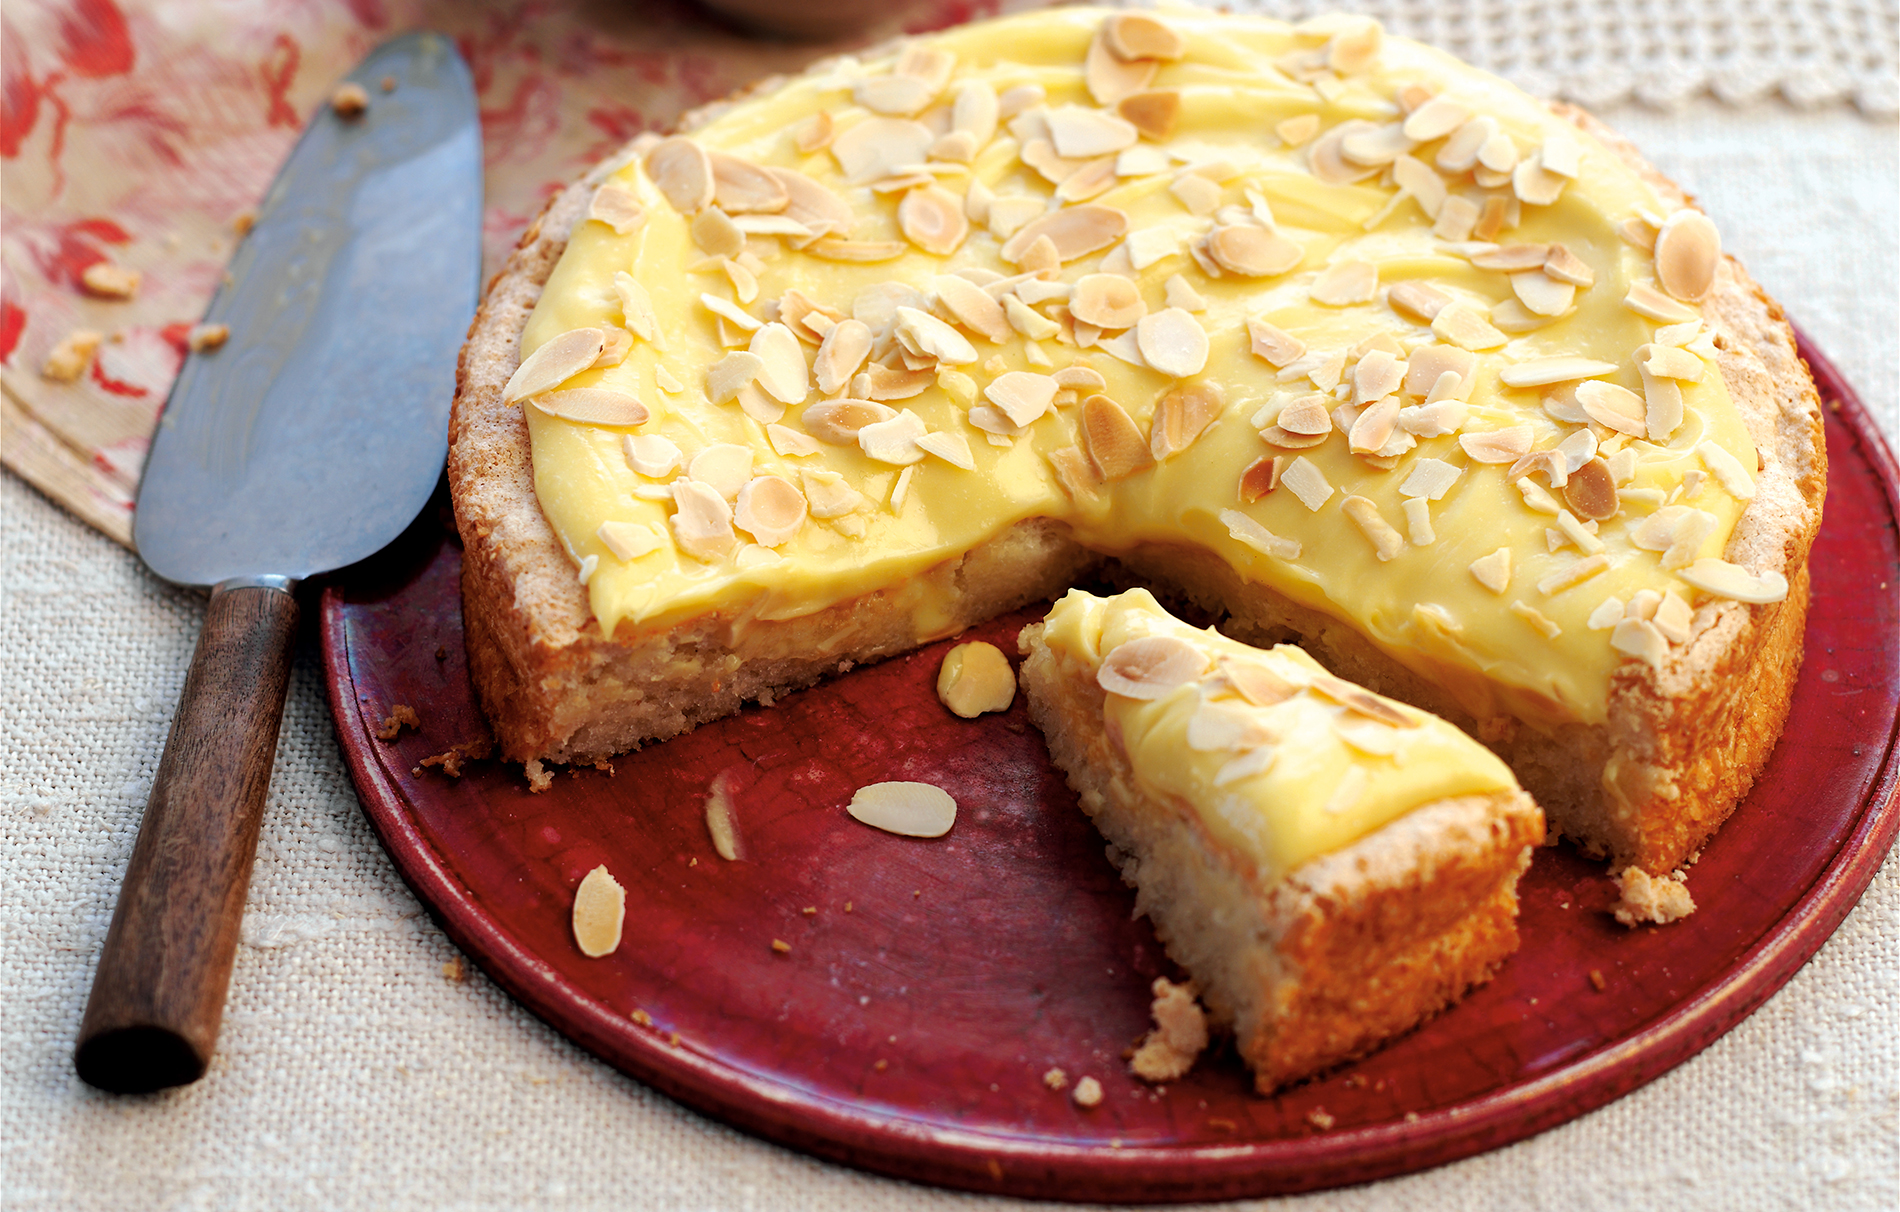 Swedish Almond Cake Recipe  Almond cake recipe, Swedish almond cake  recipe, Almond cakes